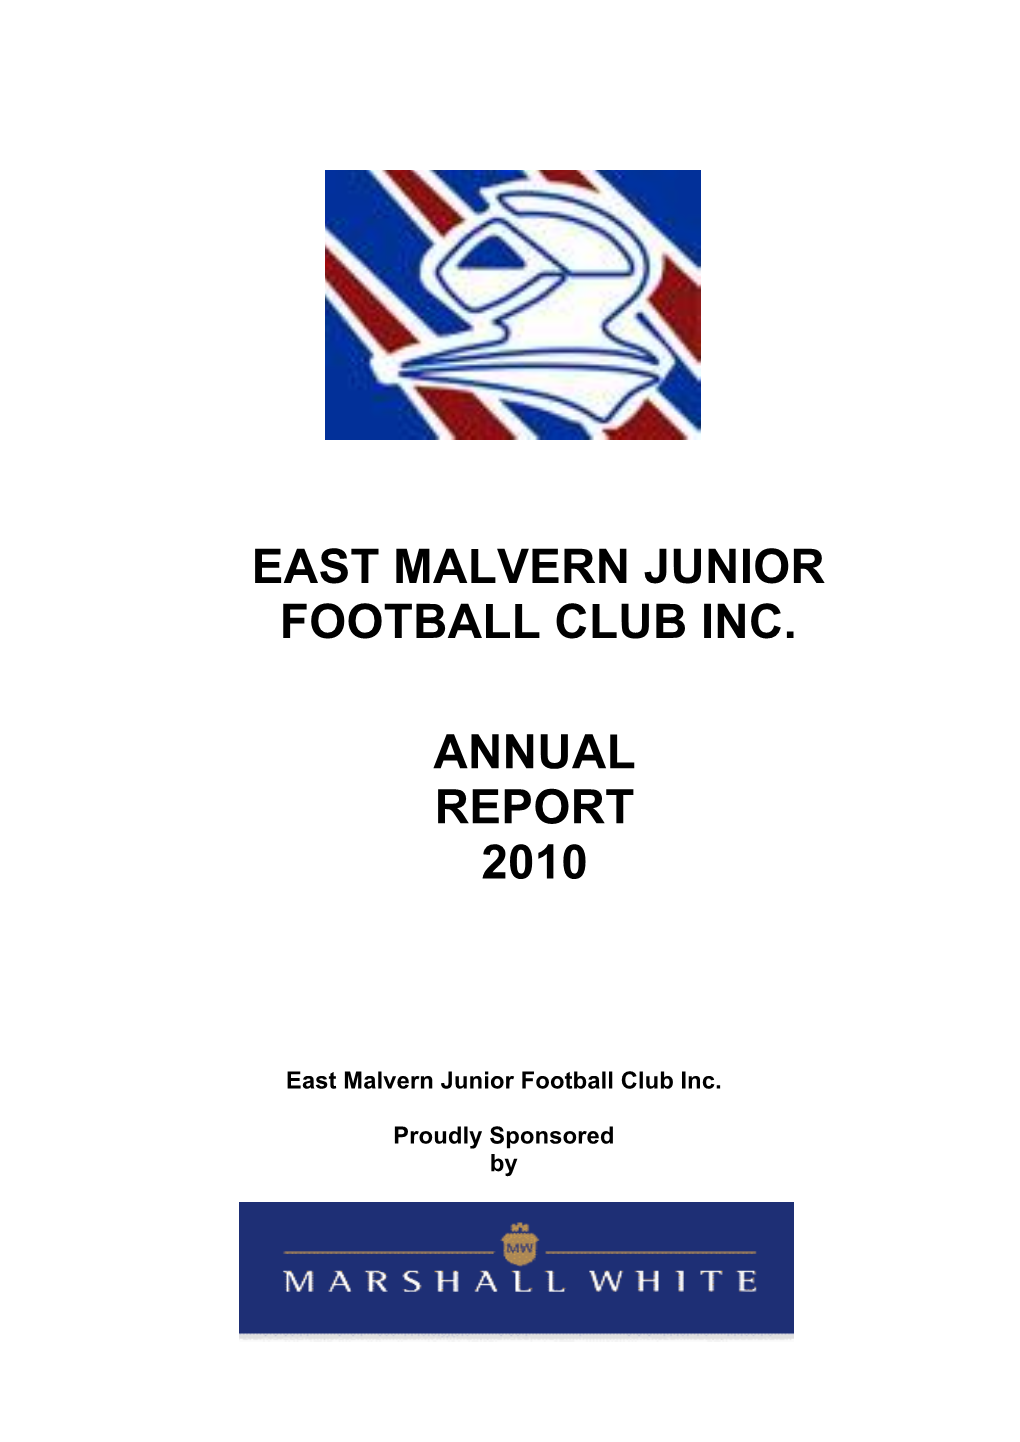 EMJFC Annual Reort 2010 Final